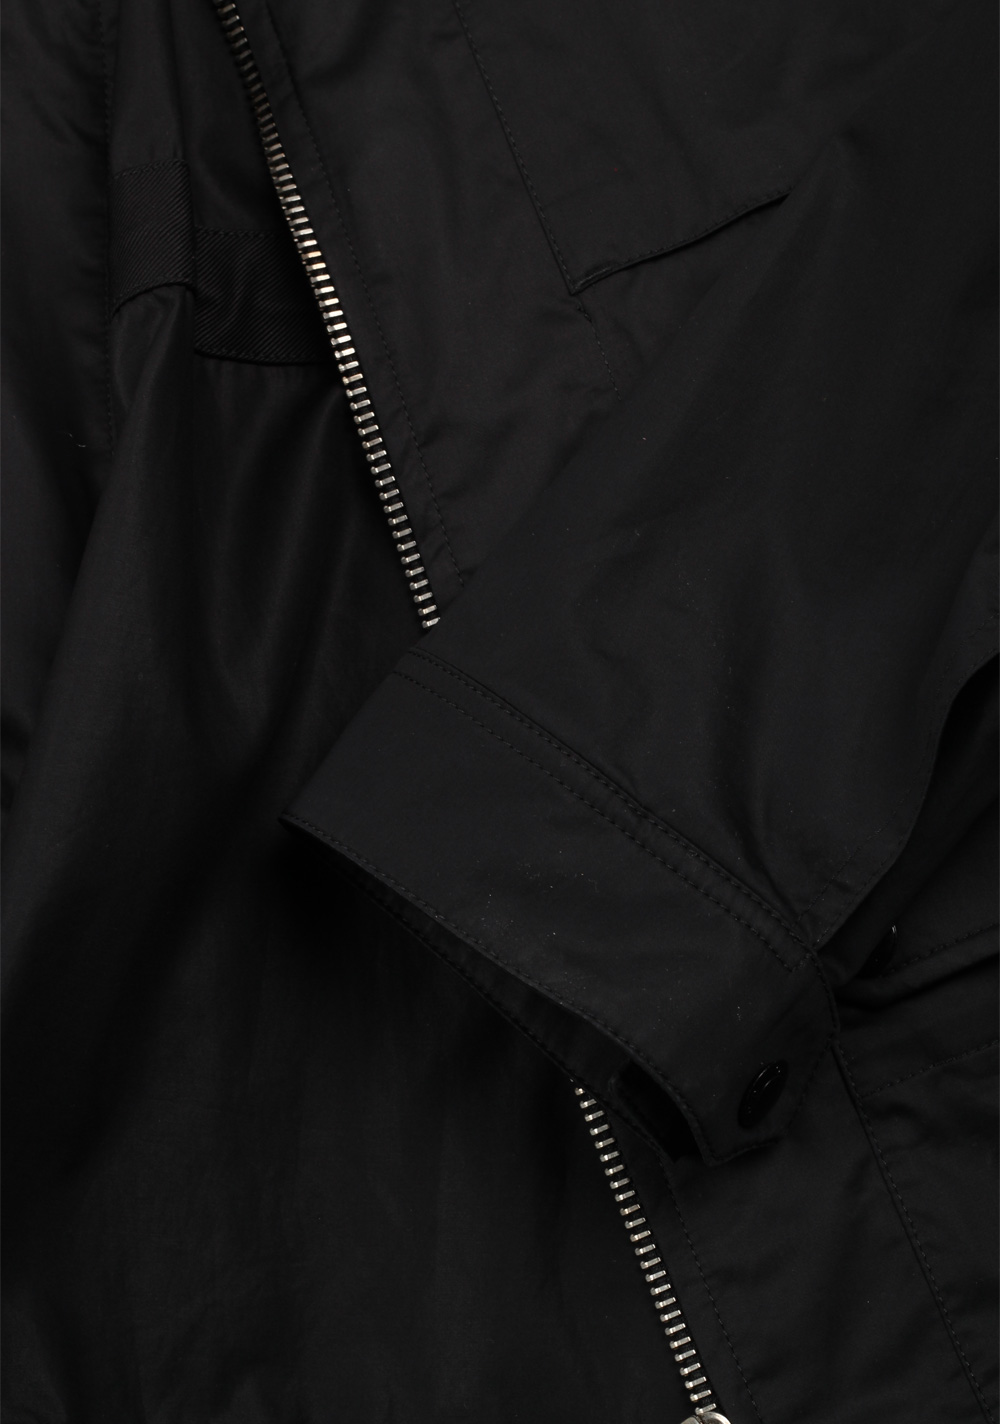 TOM FORD Black Military Field James Bond Jacket Coat | Costume Limité